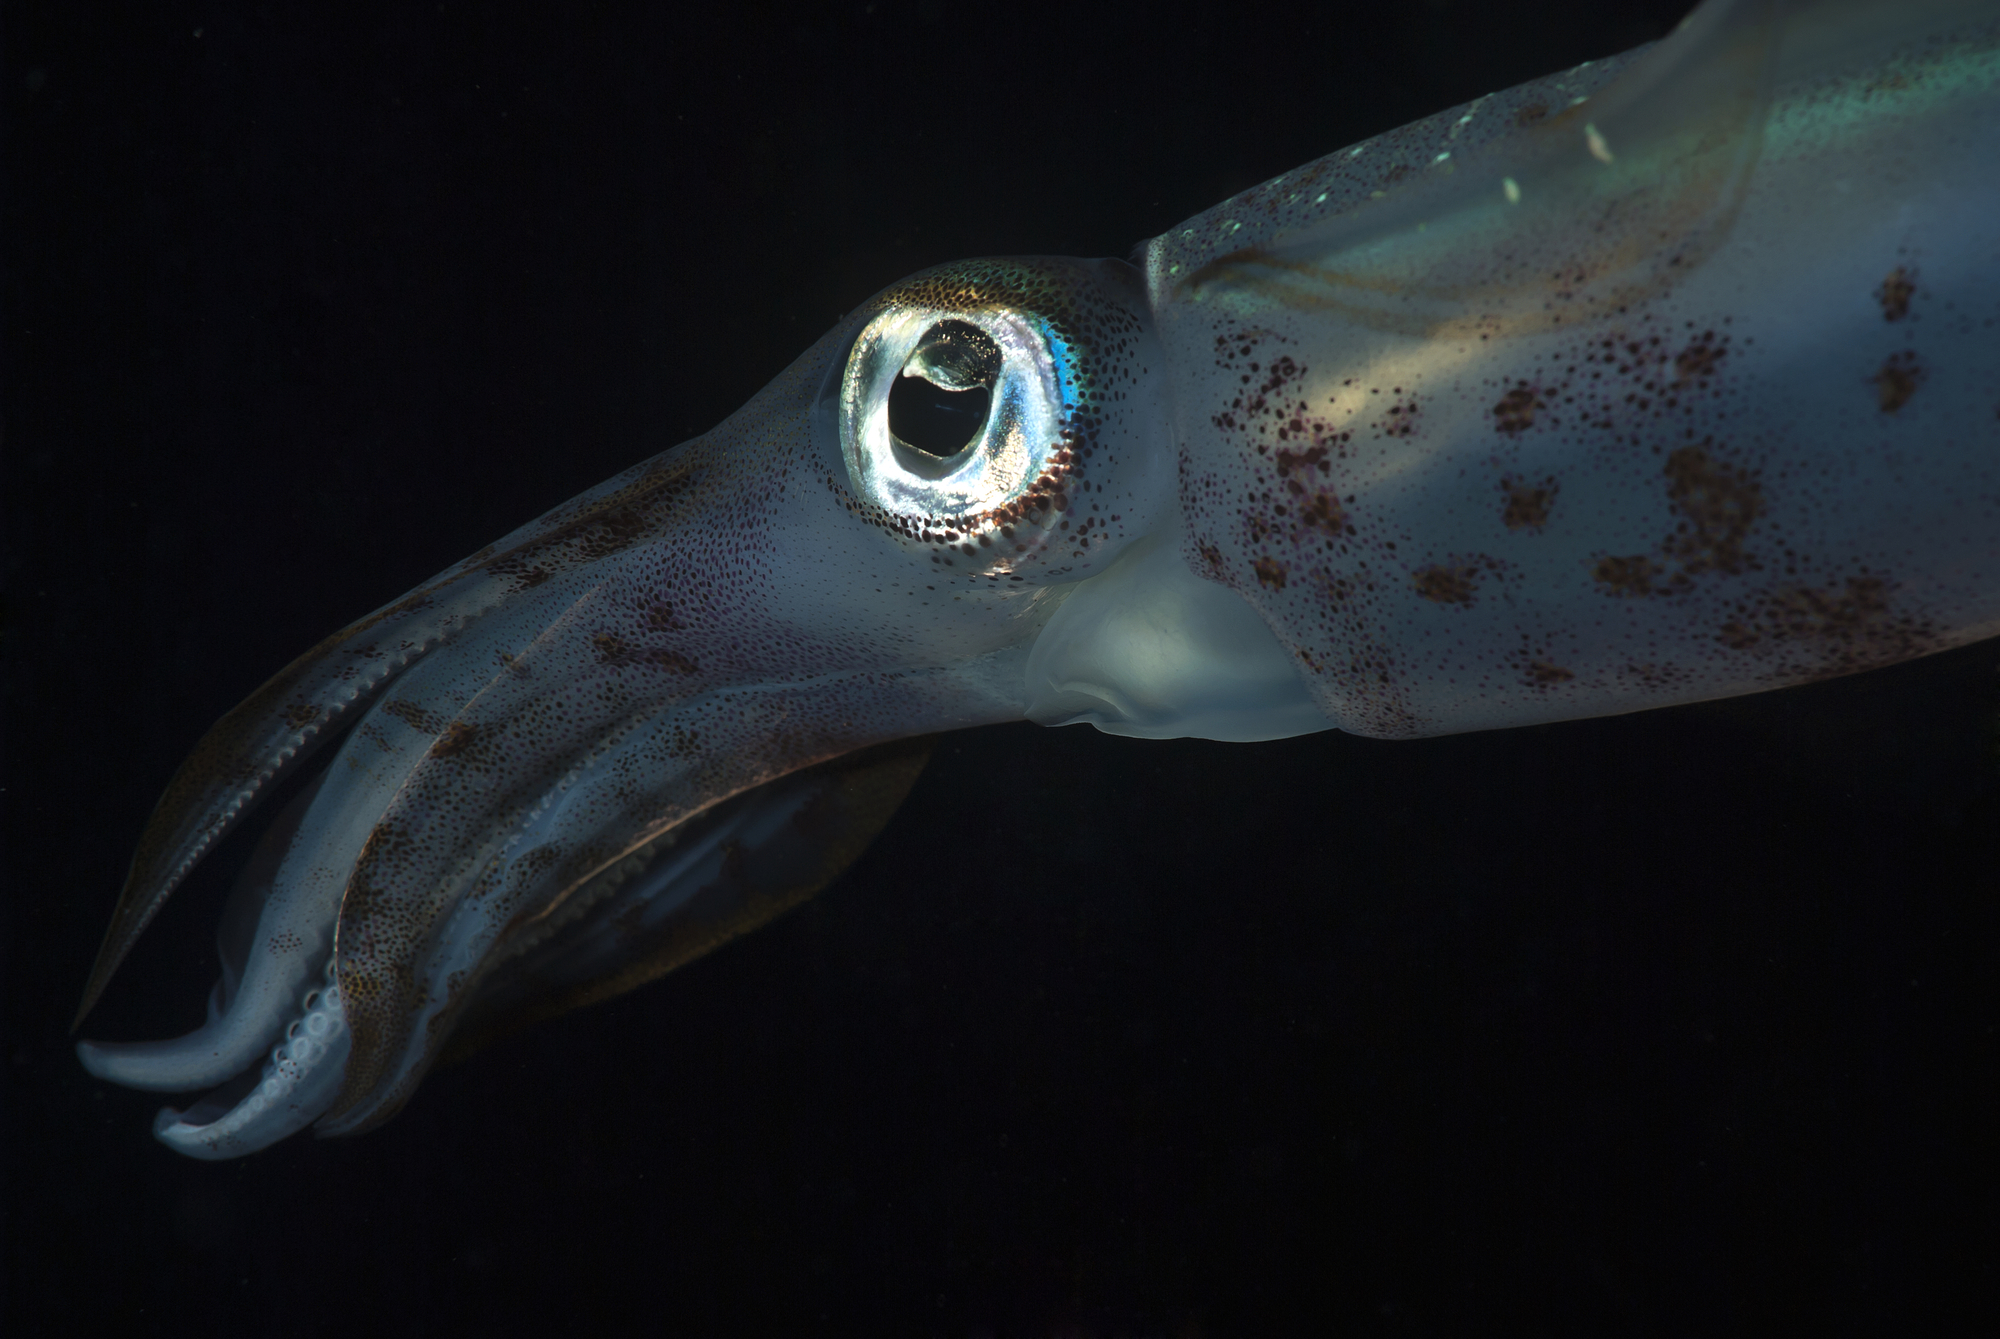 Bigfin reef squid with semitransparent skin in the ocean